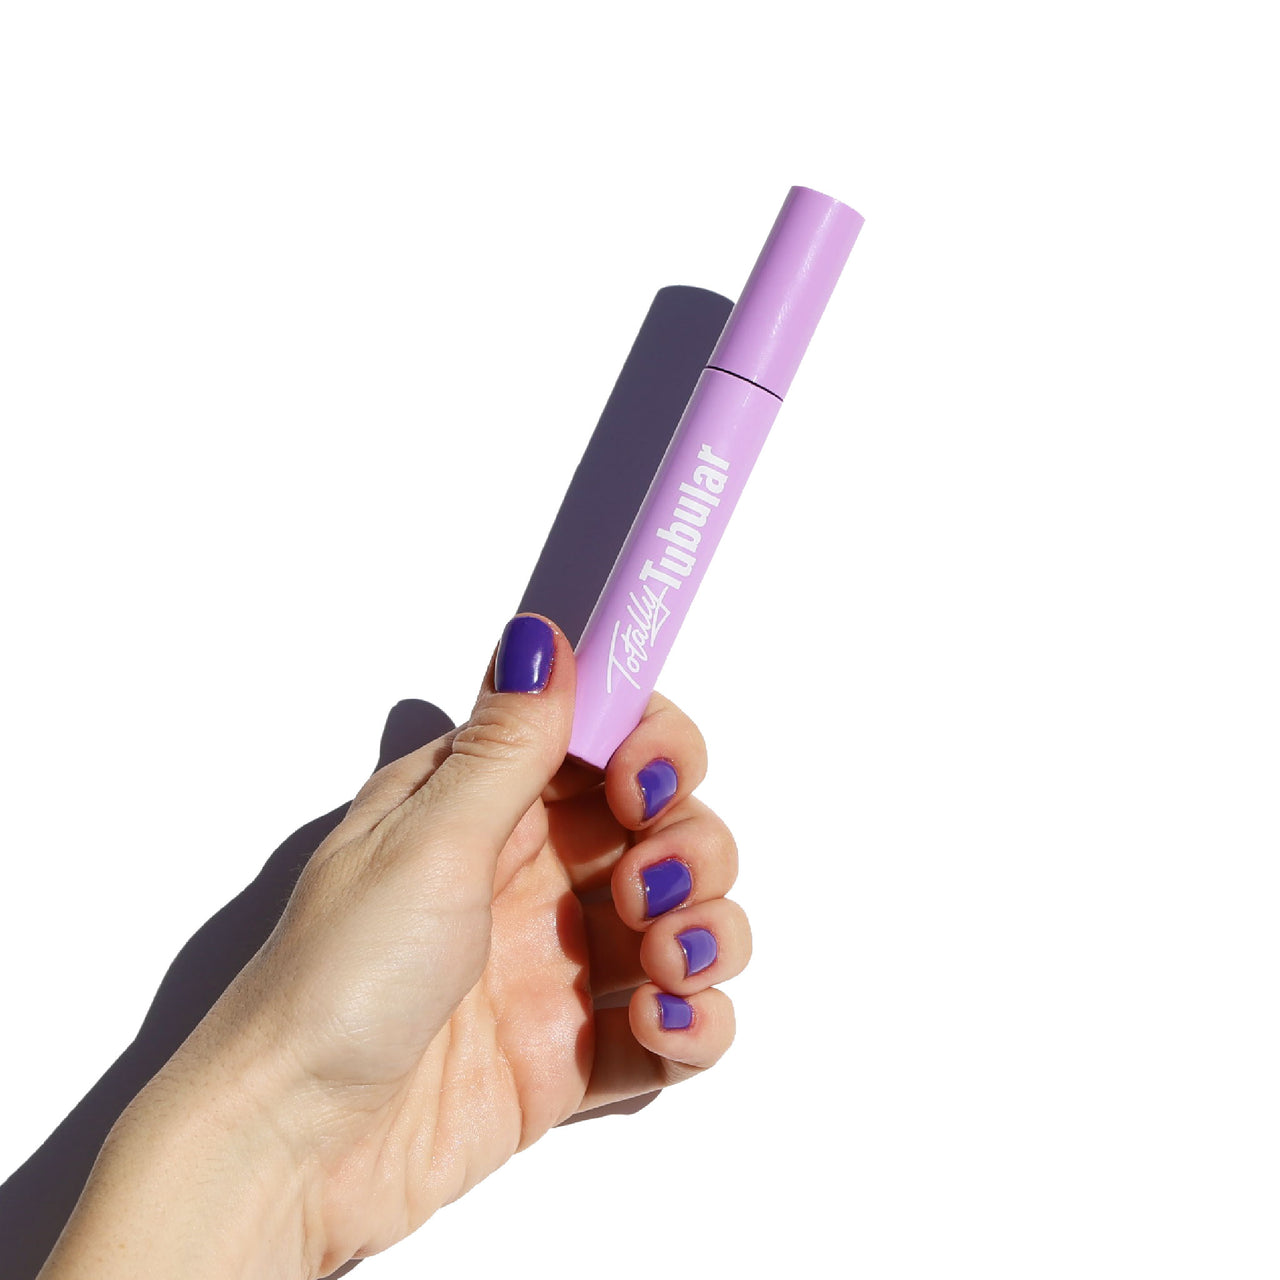 purple mascara tube with curved black applicator - totally tubular mascara, the ultimate - half caked makeup